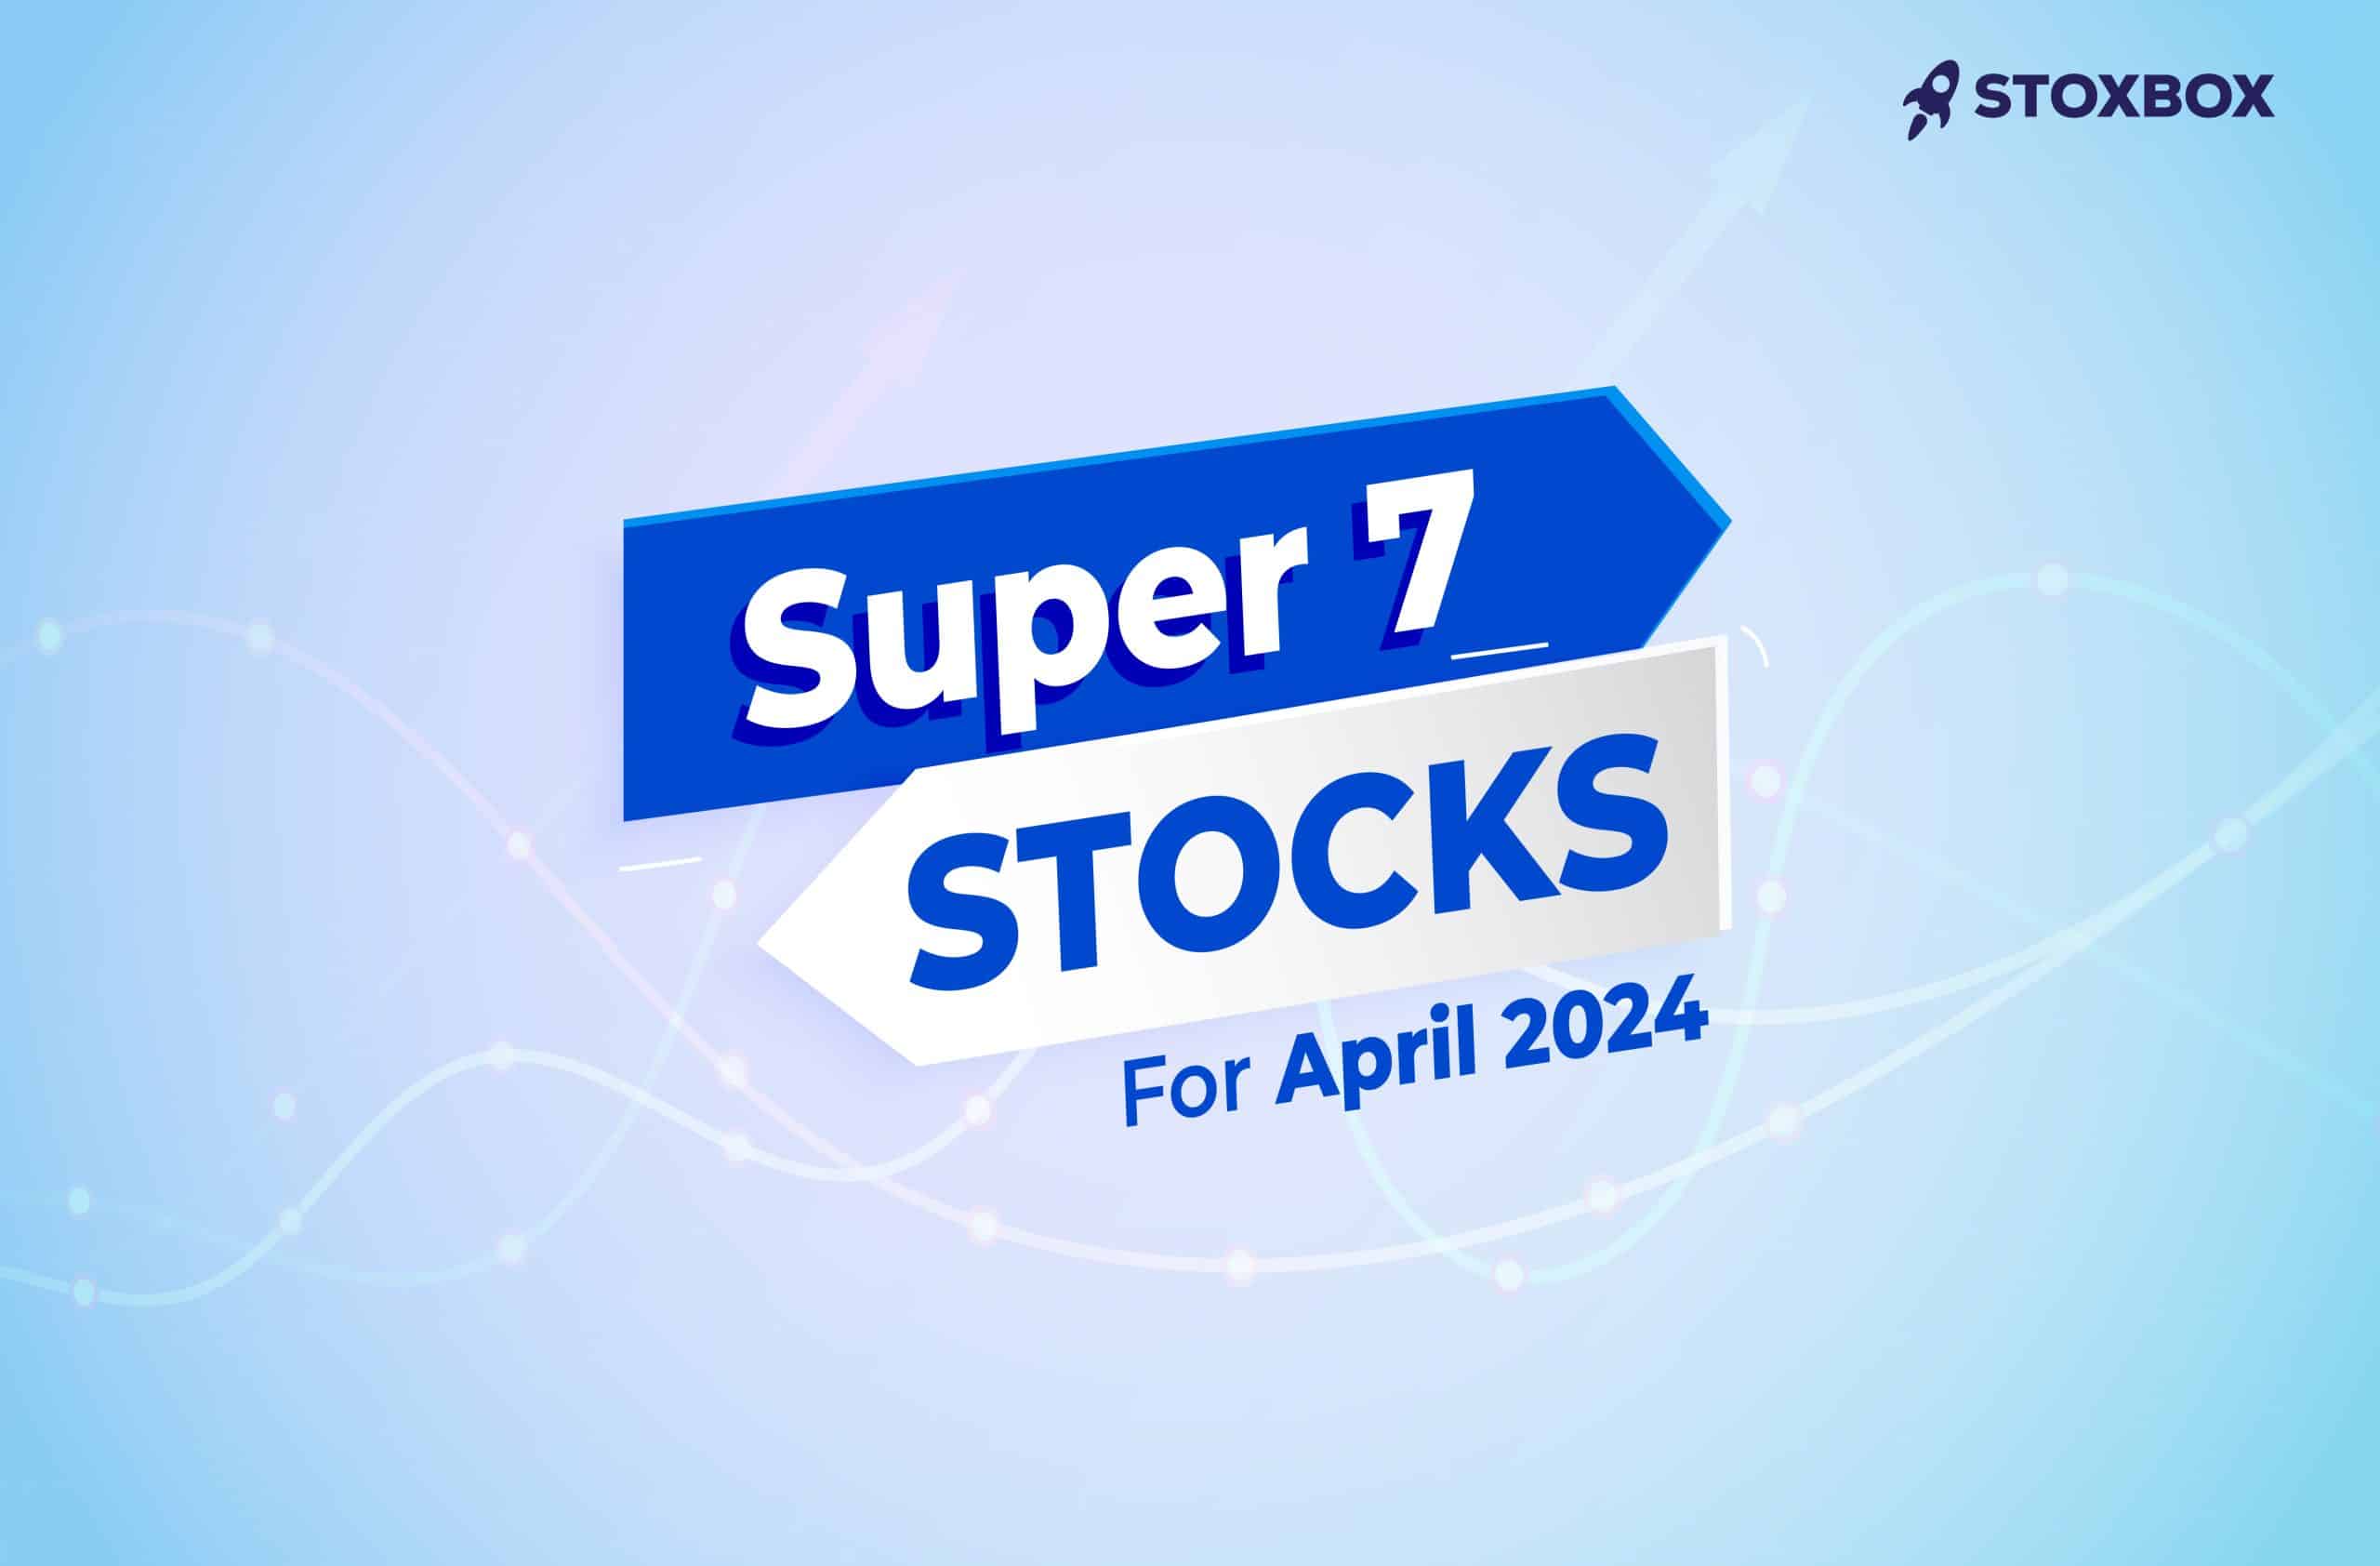 7 Super Stocks for April 2024